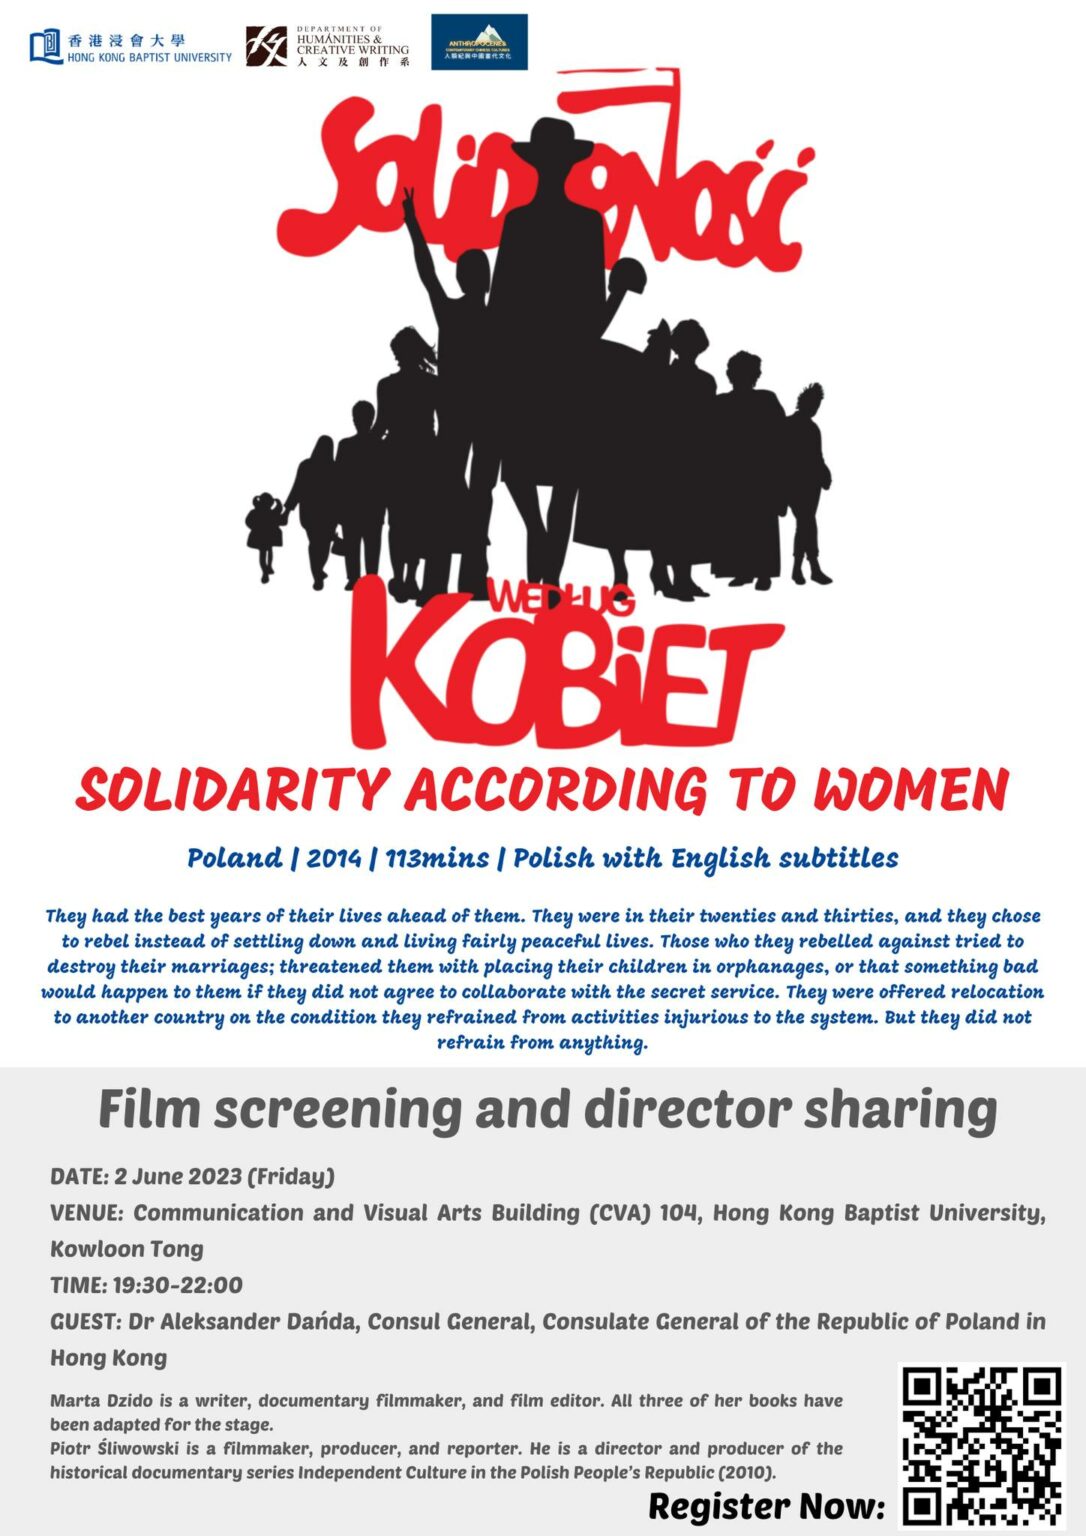 Film Screening Solidarity According to Women by Marta Dzido and Piotr Sliwowski